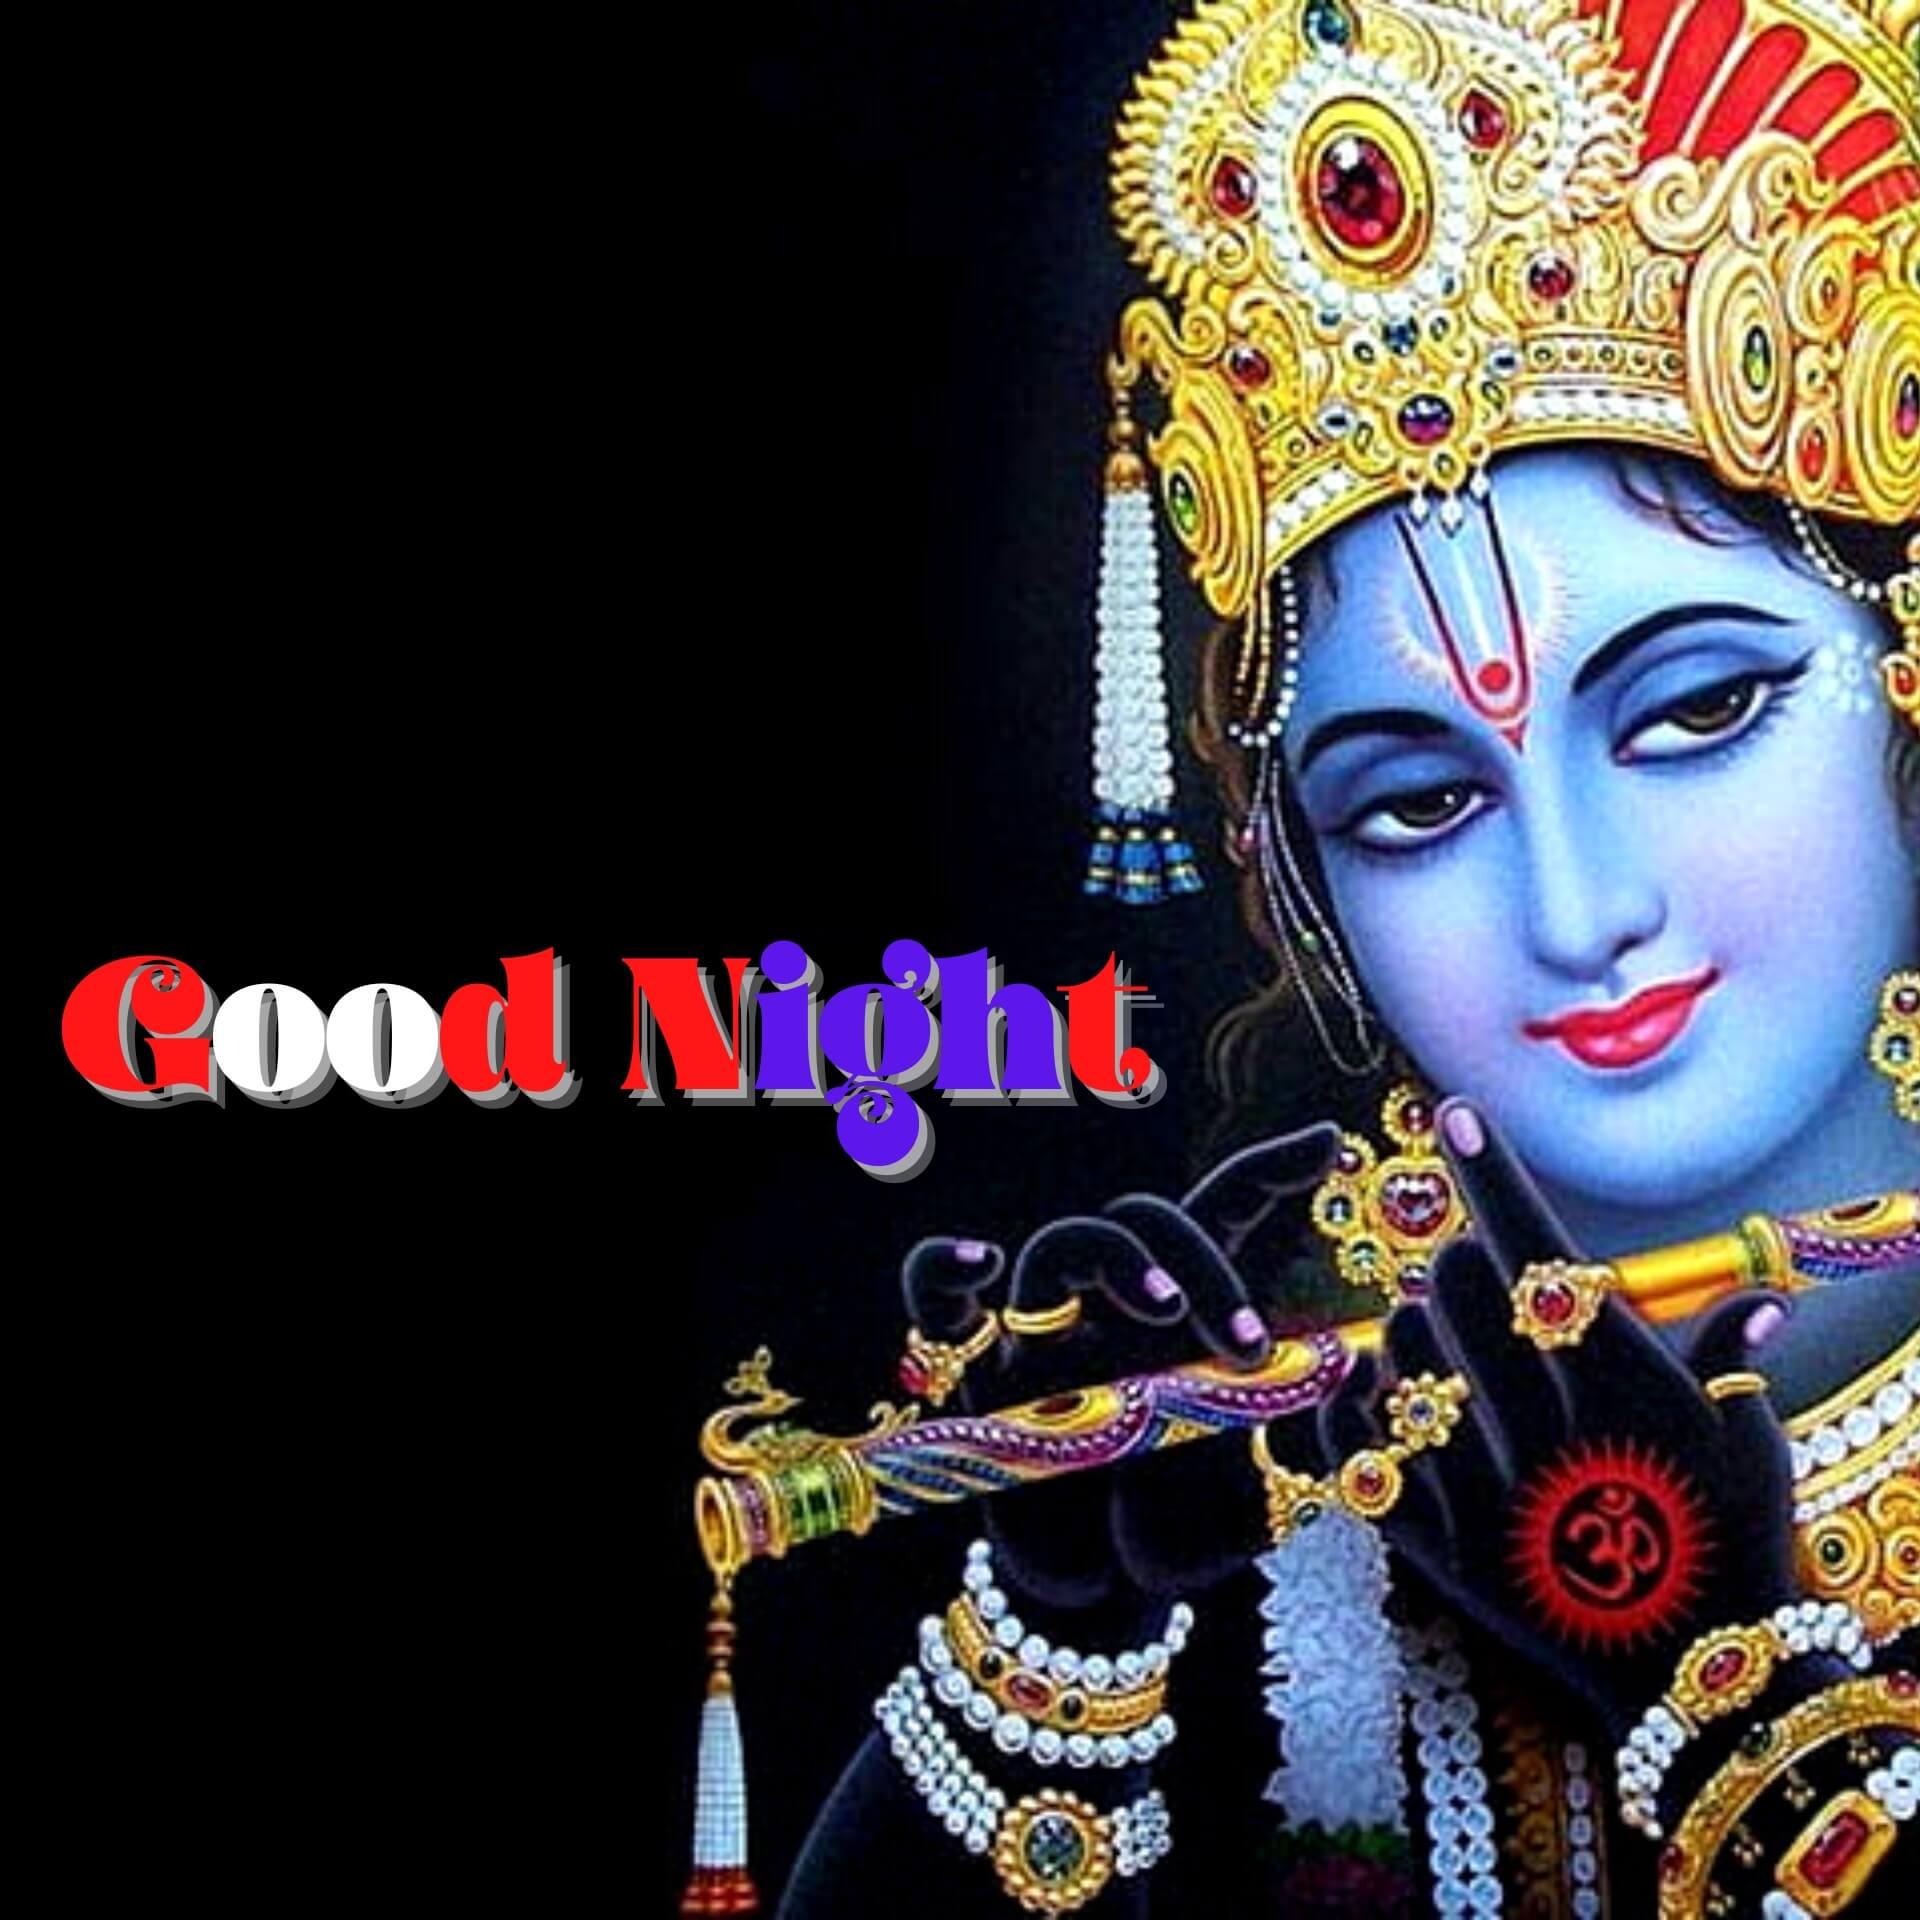 God Good Night Images Wallpaper With krishna